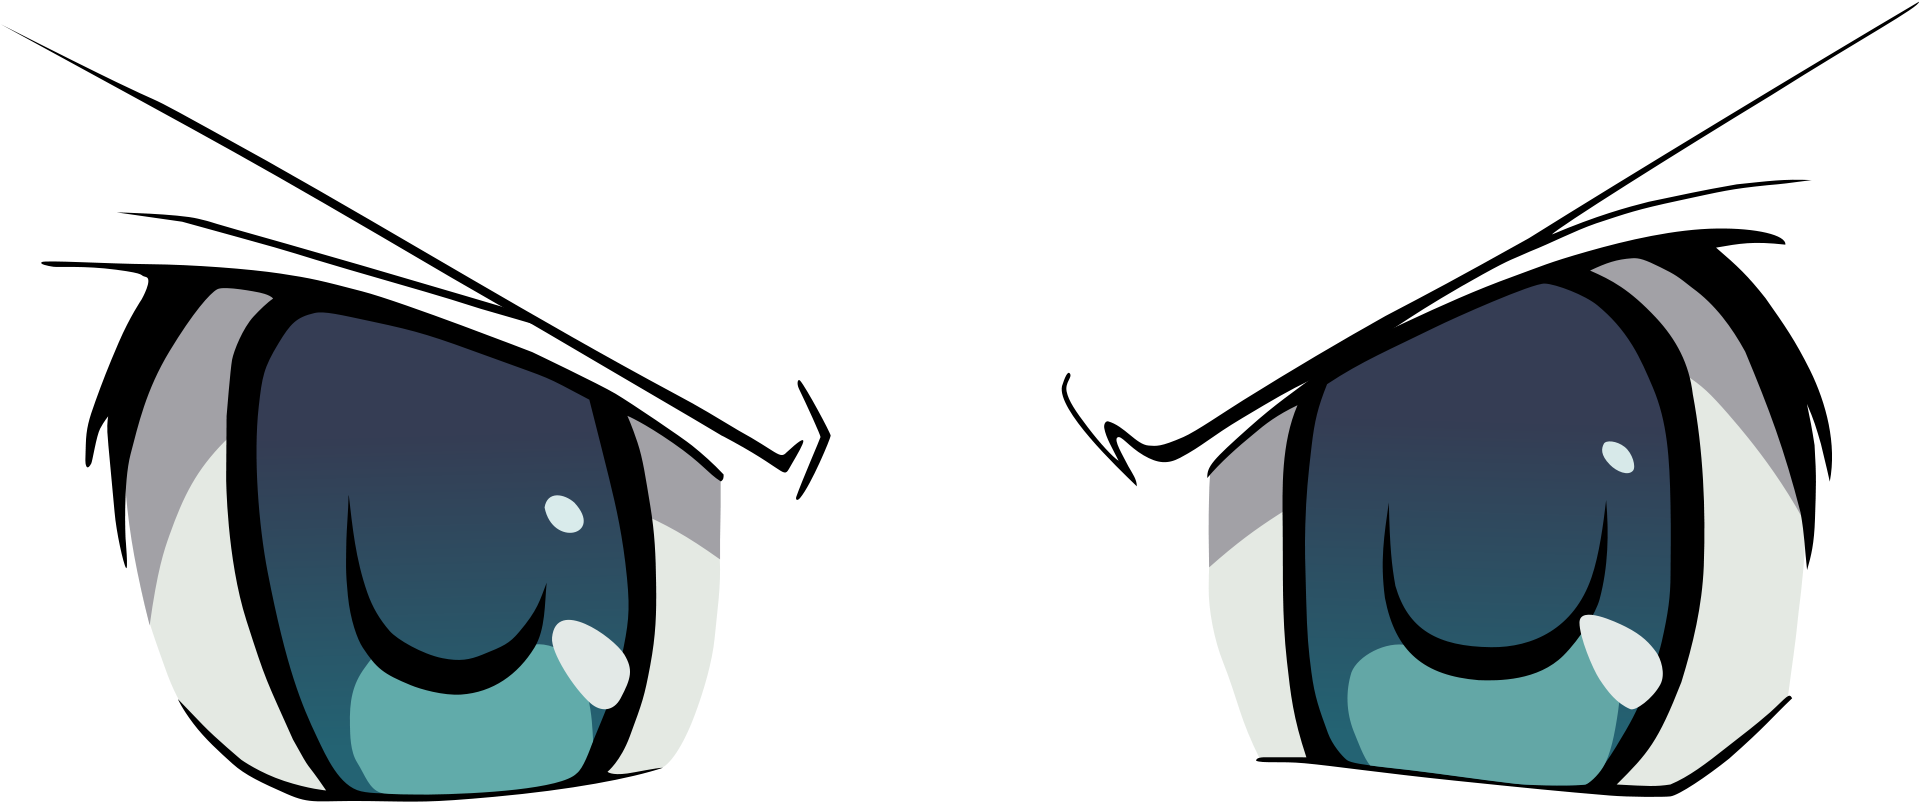 Expresión de ojos de dibujos animados PNG transparente Image